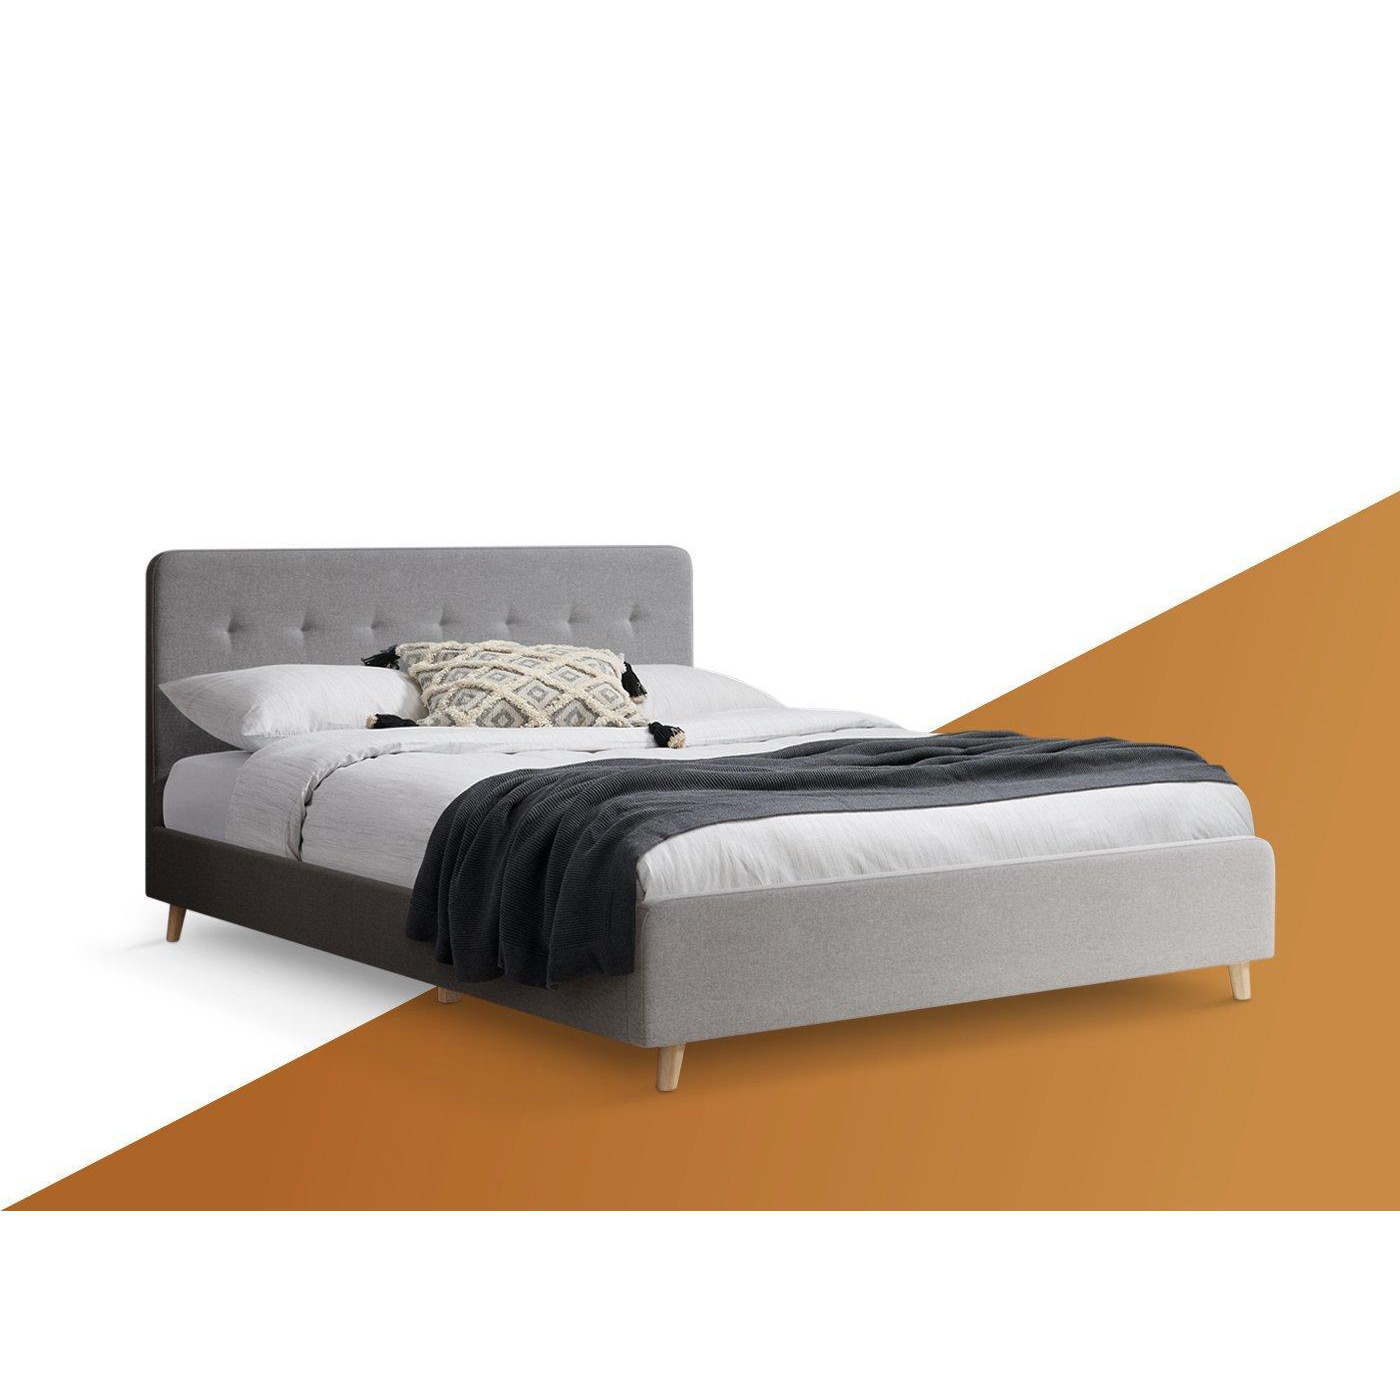 Emmerson Upholstered Bed Frame - Grey - 4'6 Double